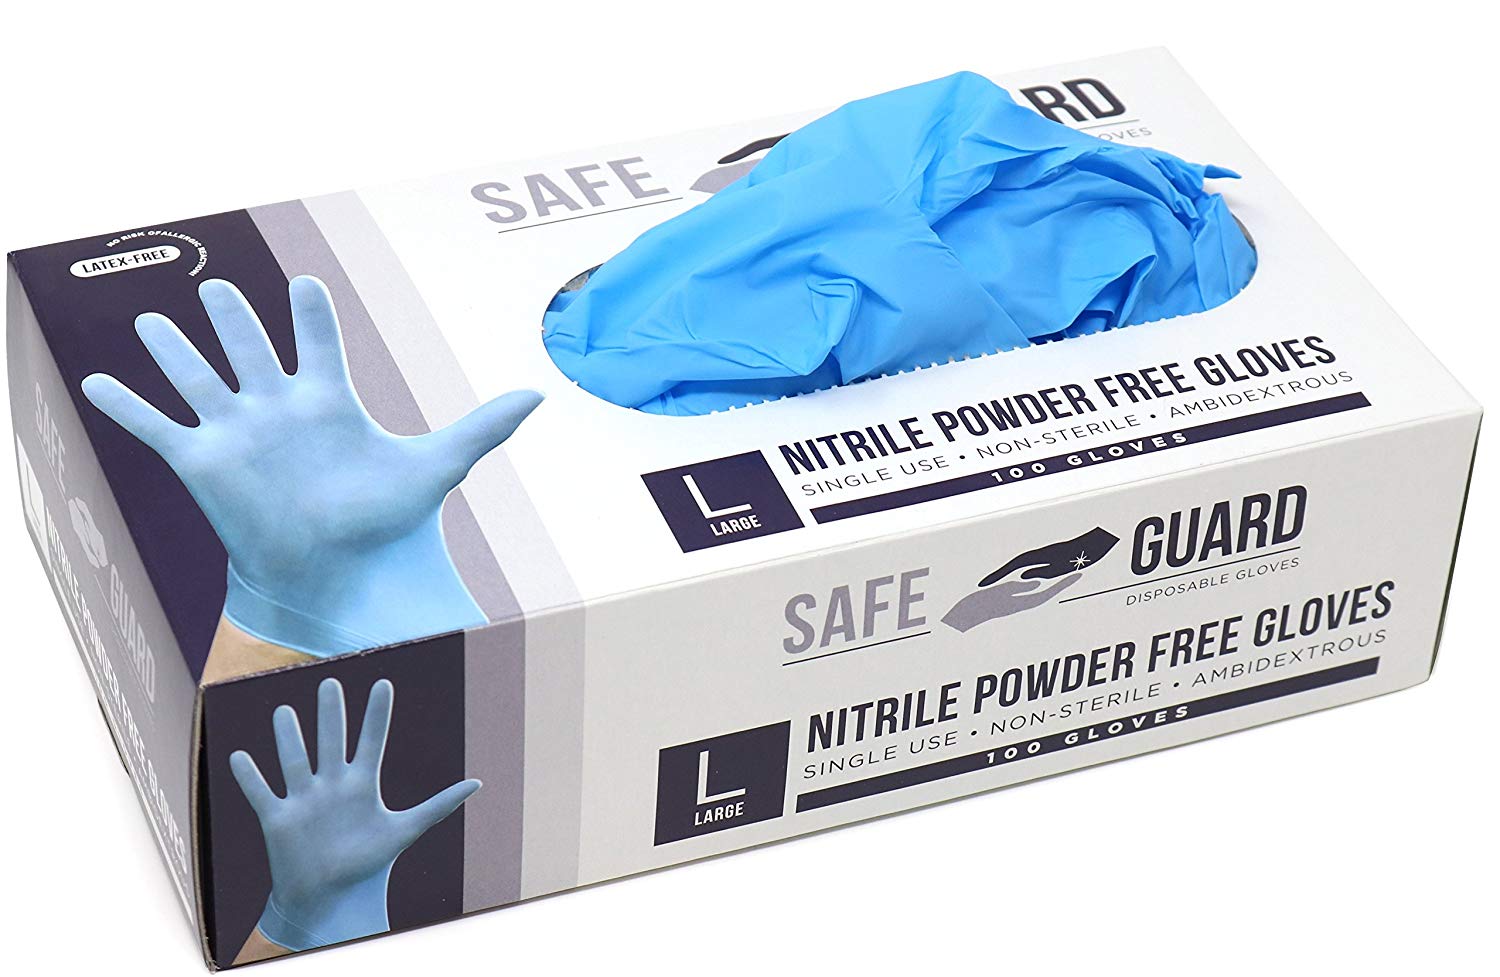 Powdered Free Latex Examination Gloves 